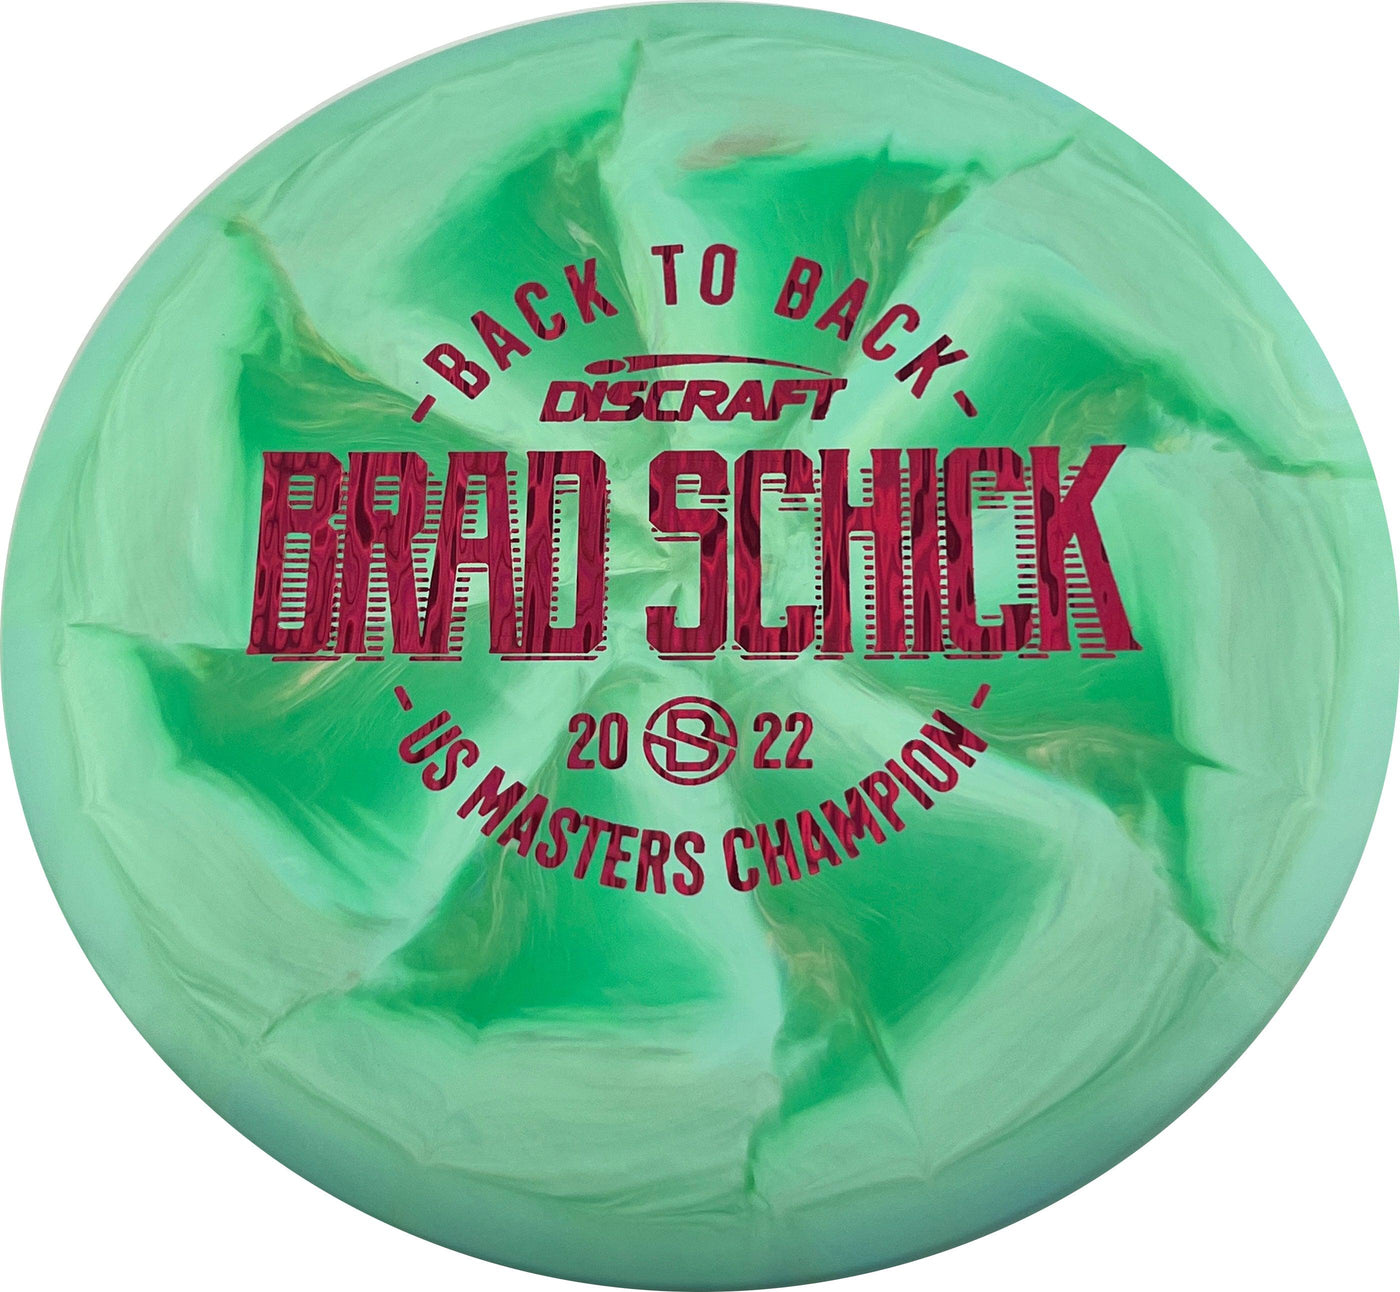 Discraft ESP Swirl Flex Buzzz with Brad Schick - 2022 US Masters Champion Stamp